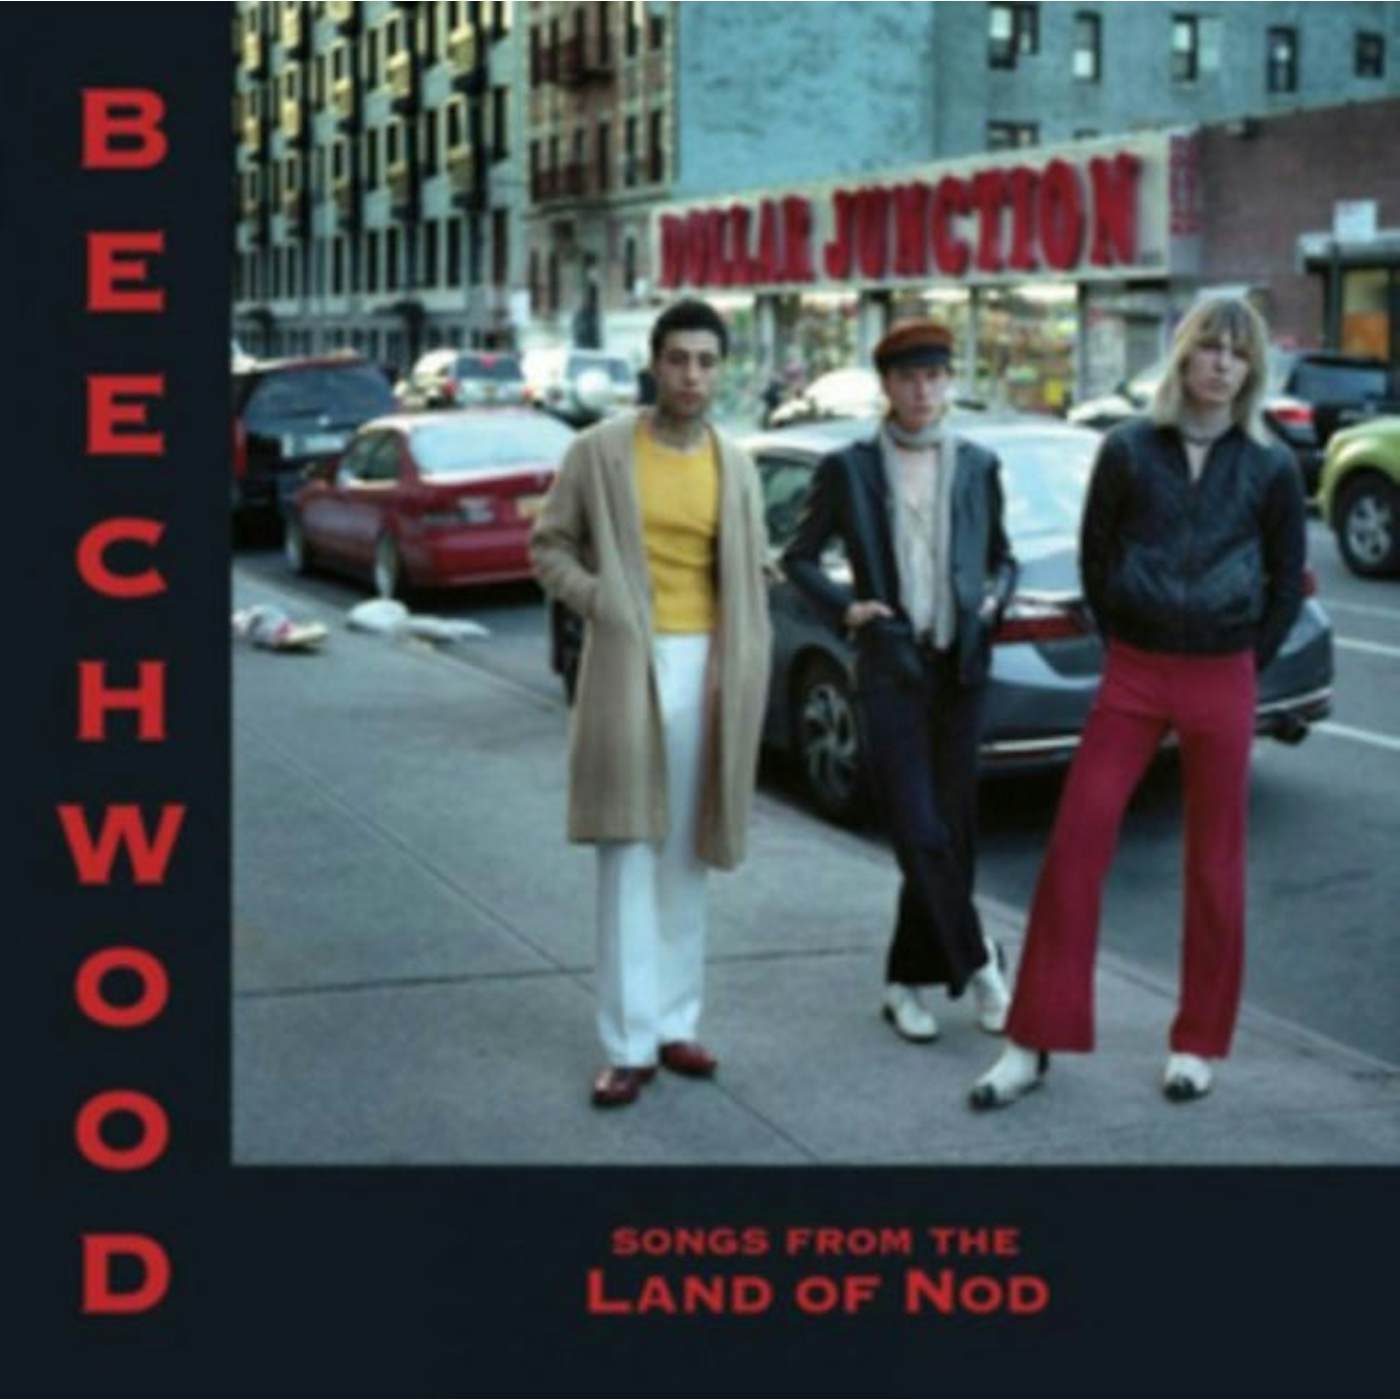 Beechwood LP - Songs From The Land Of Nod (Vinyl)